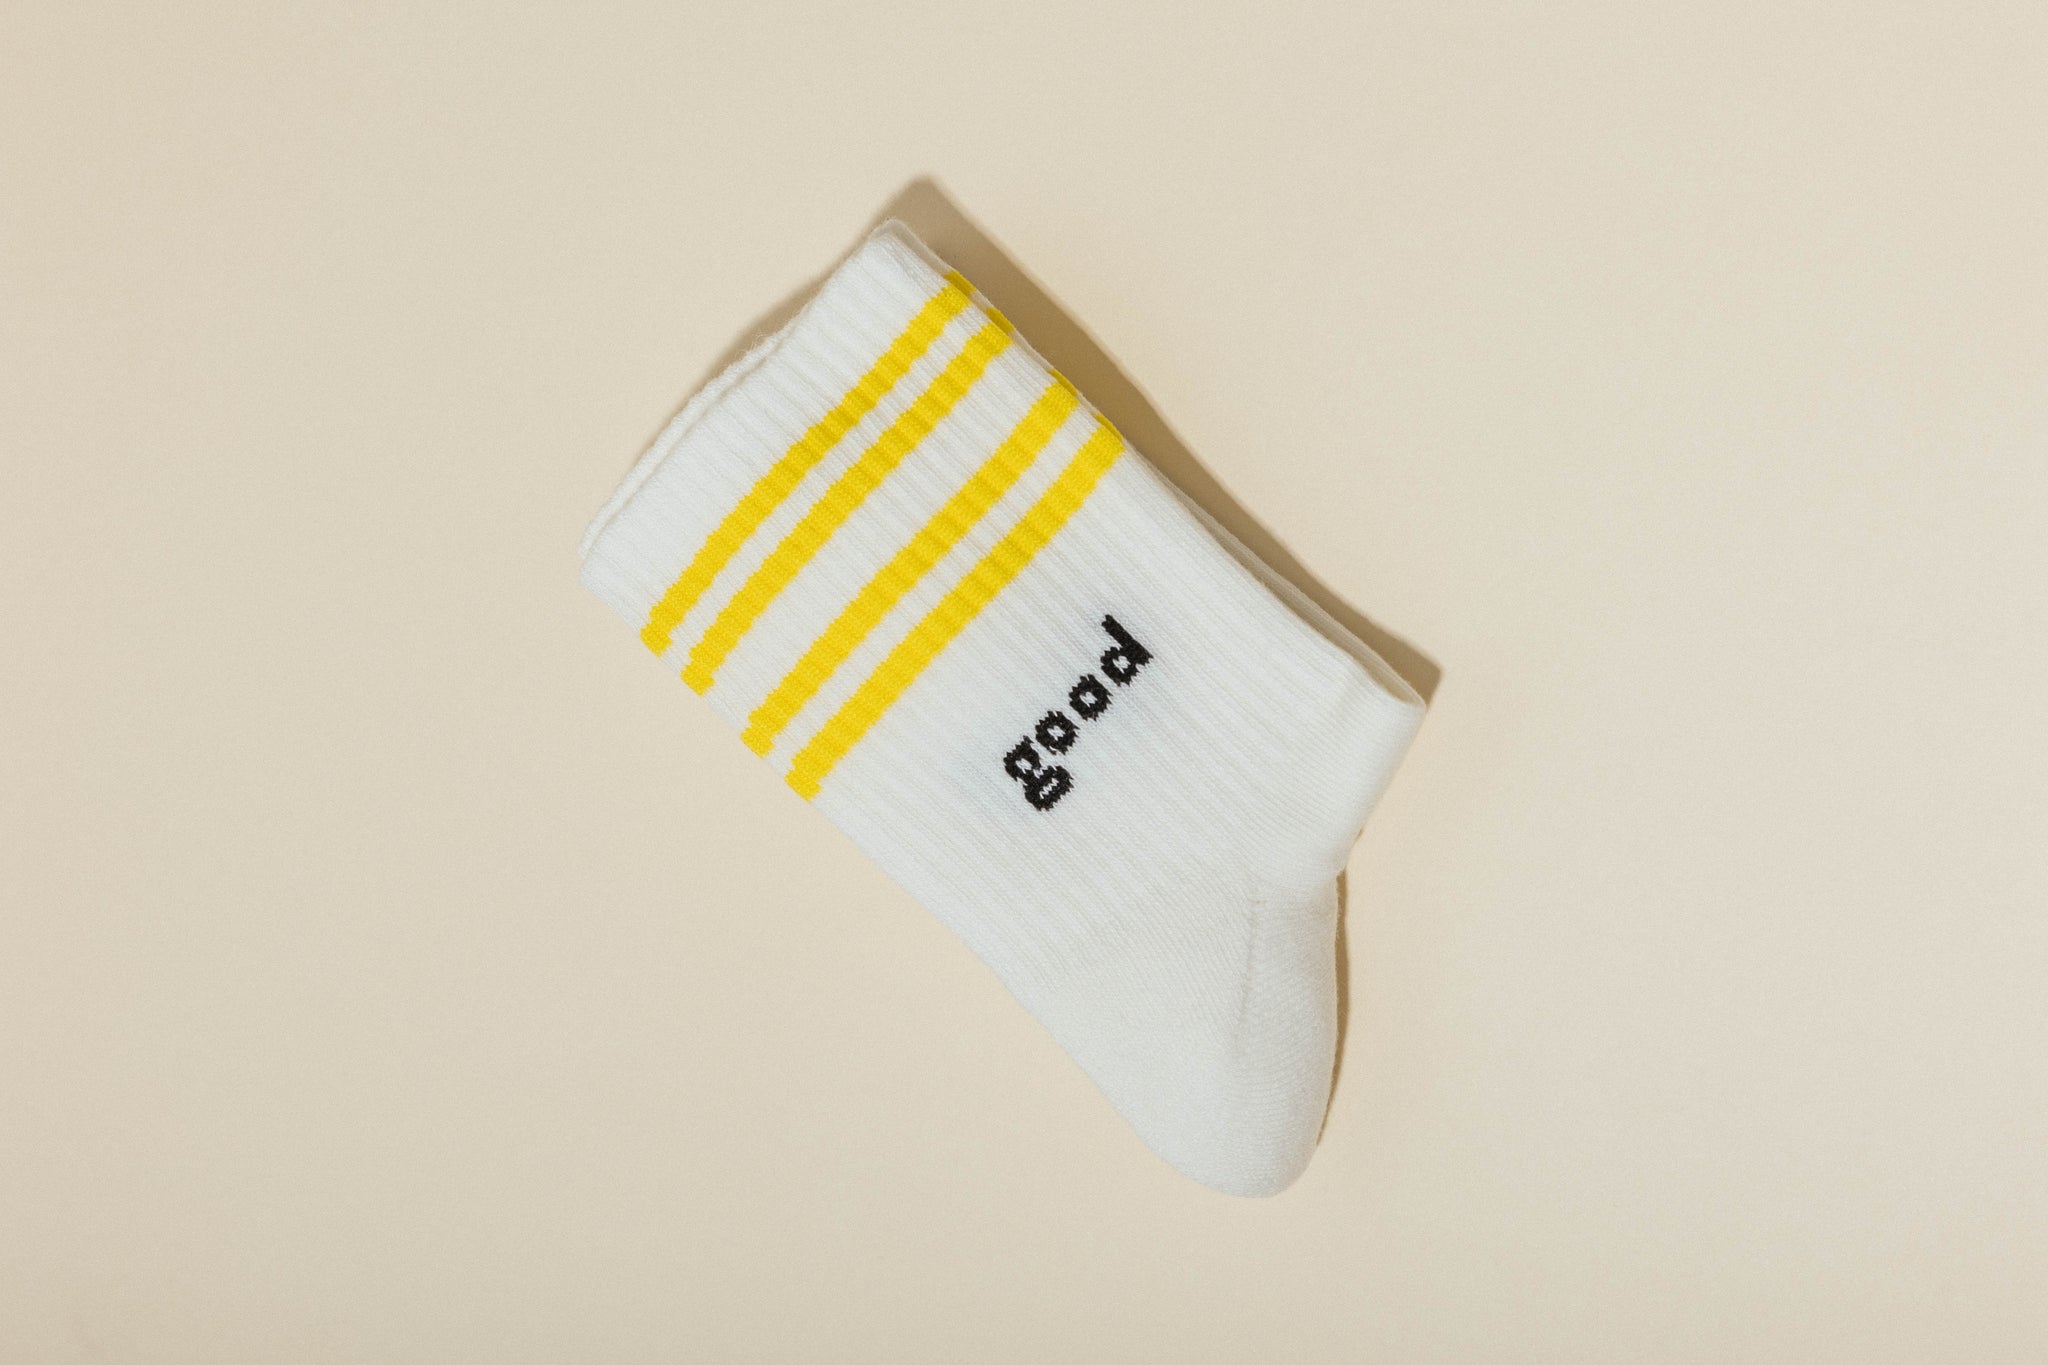 Good Socks - Classic Yellow